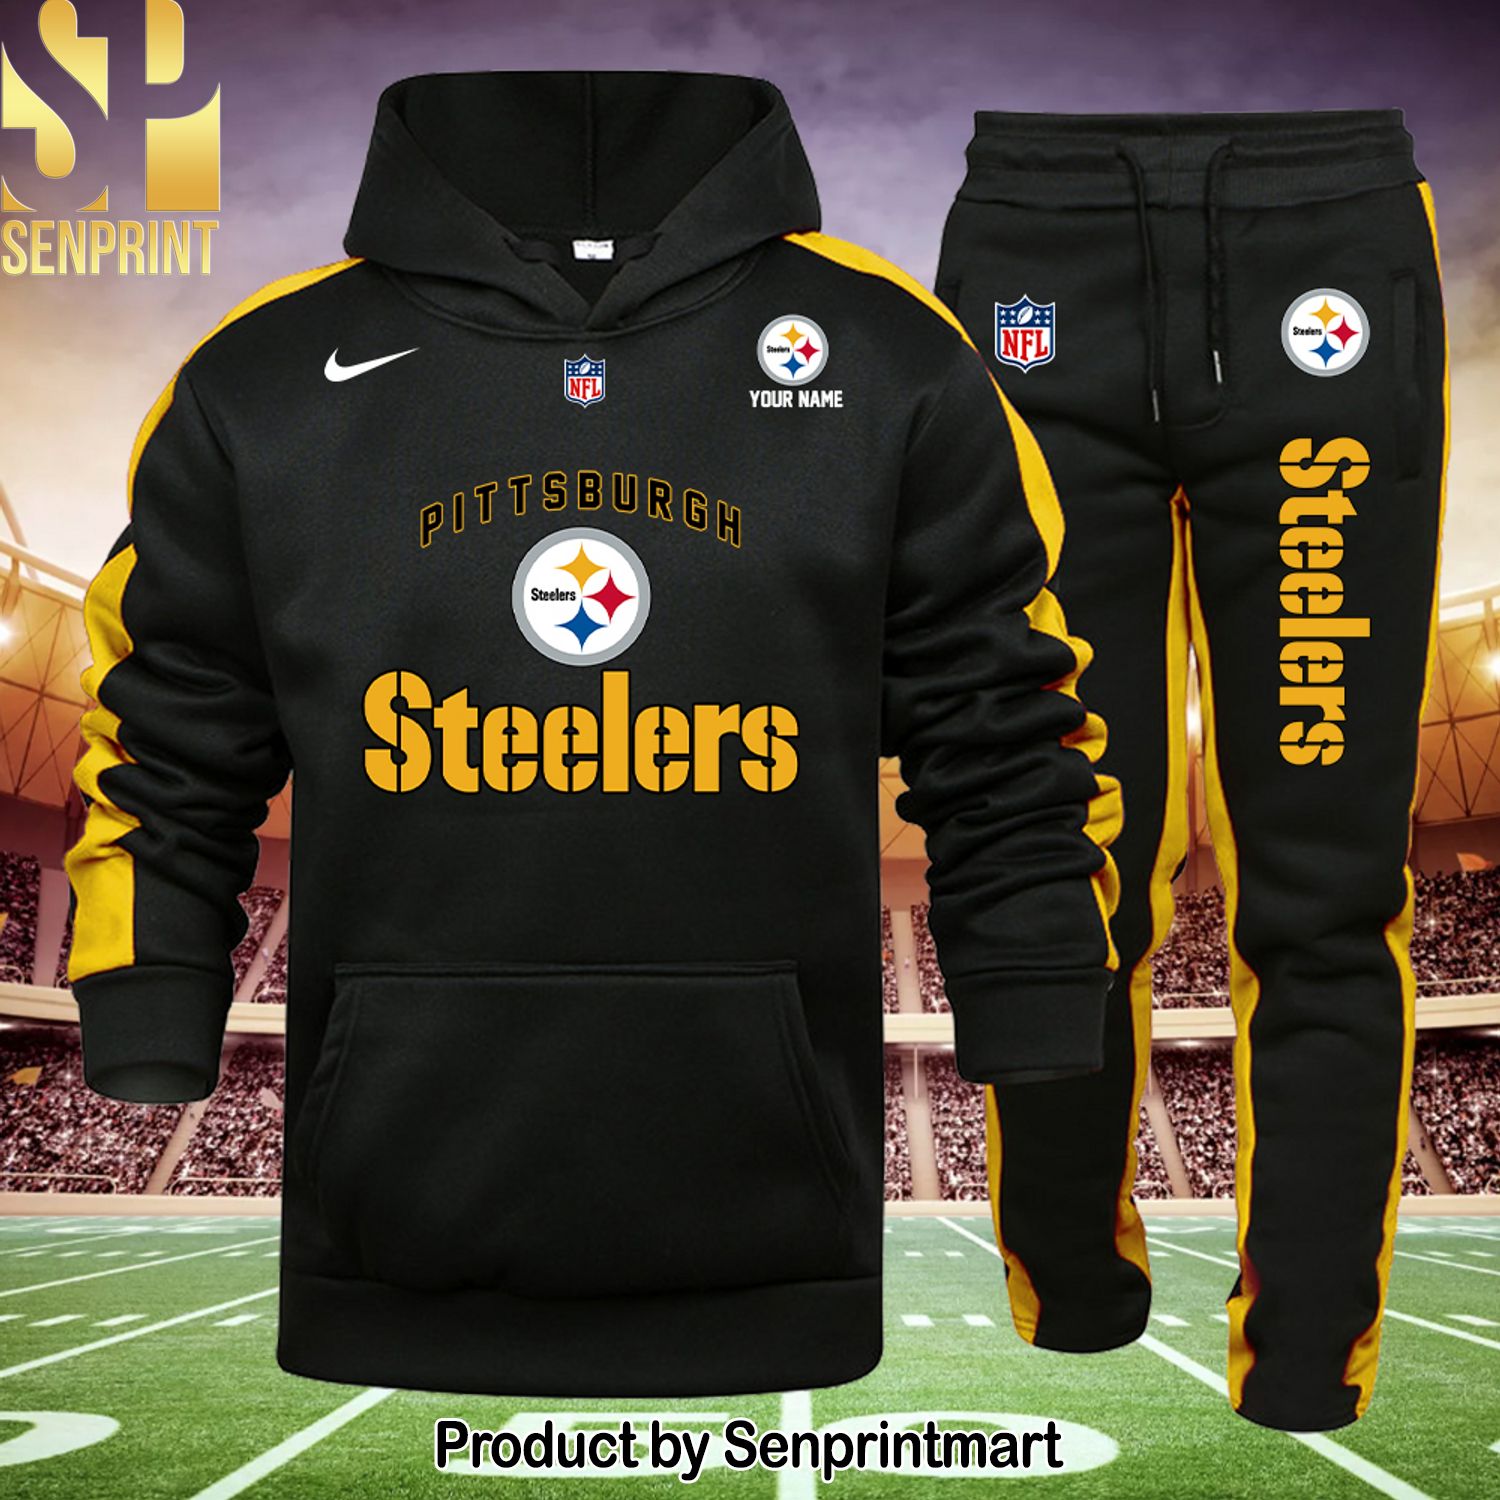 NFL Pittsburgh Steelers Full Printing Shirt and Sweatpants